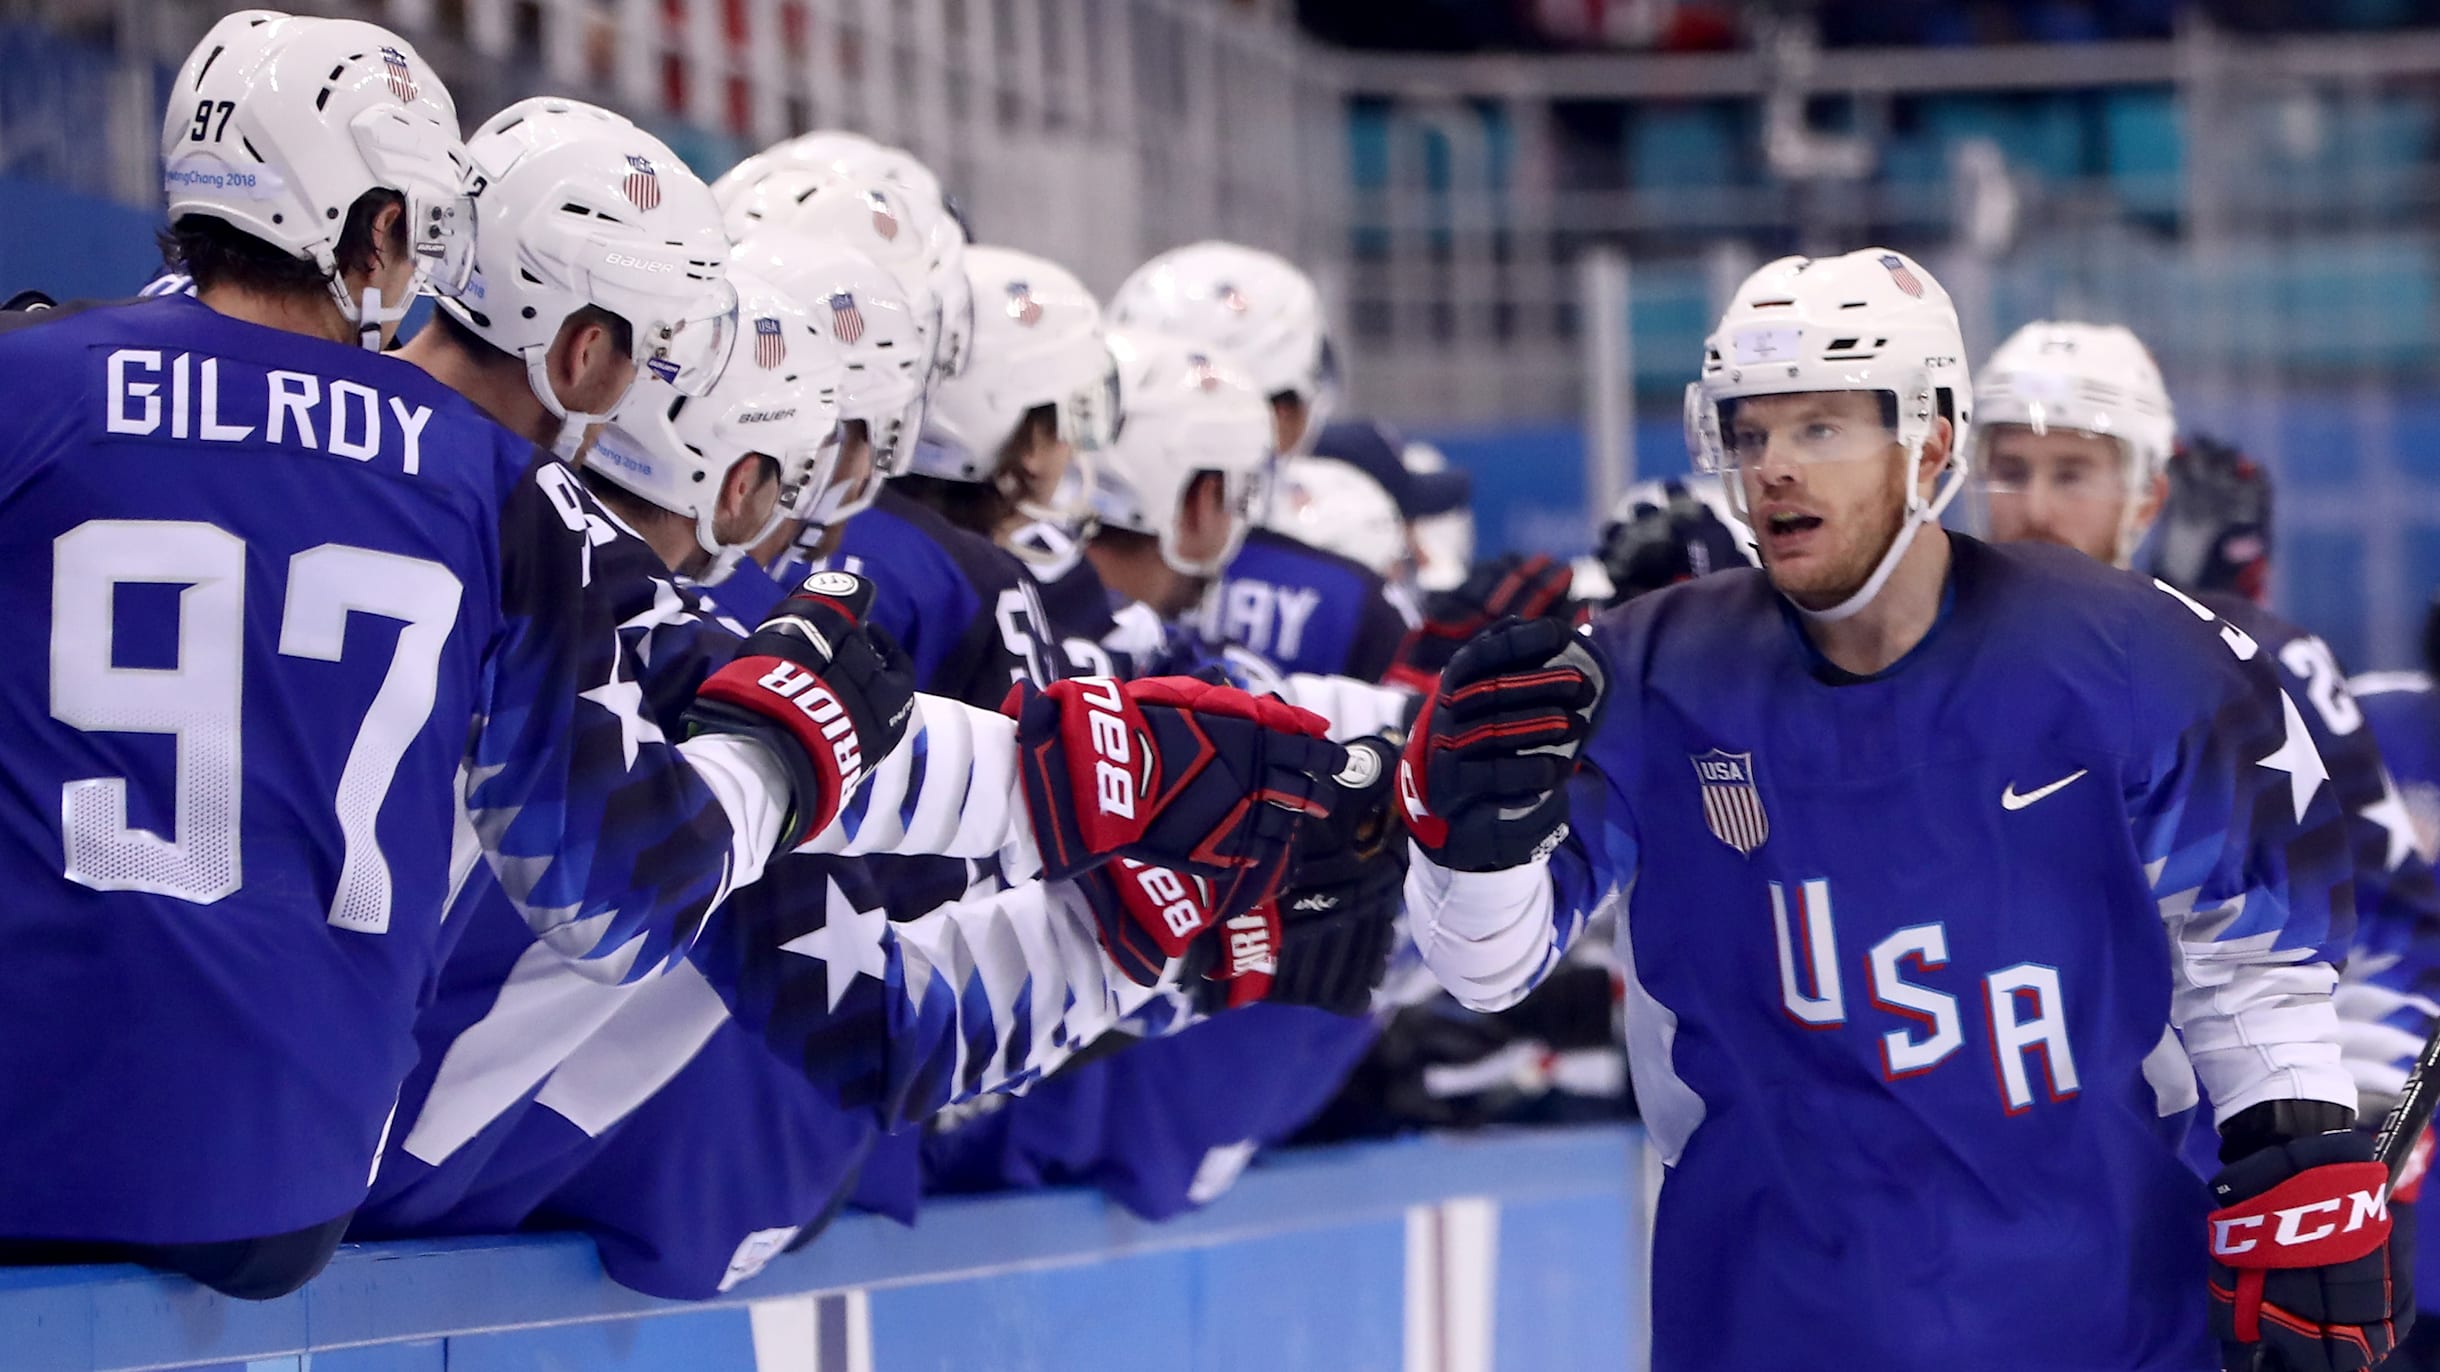 Beijing 2022 Ice Hockey: Team USA Preview